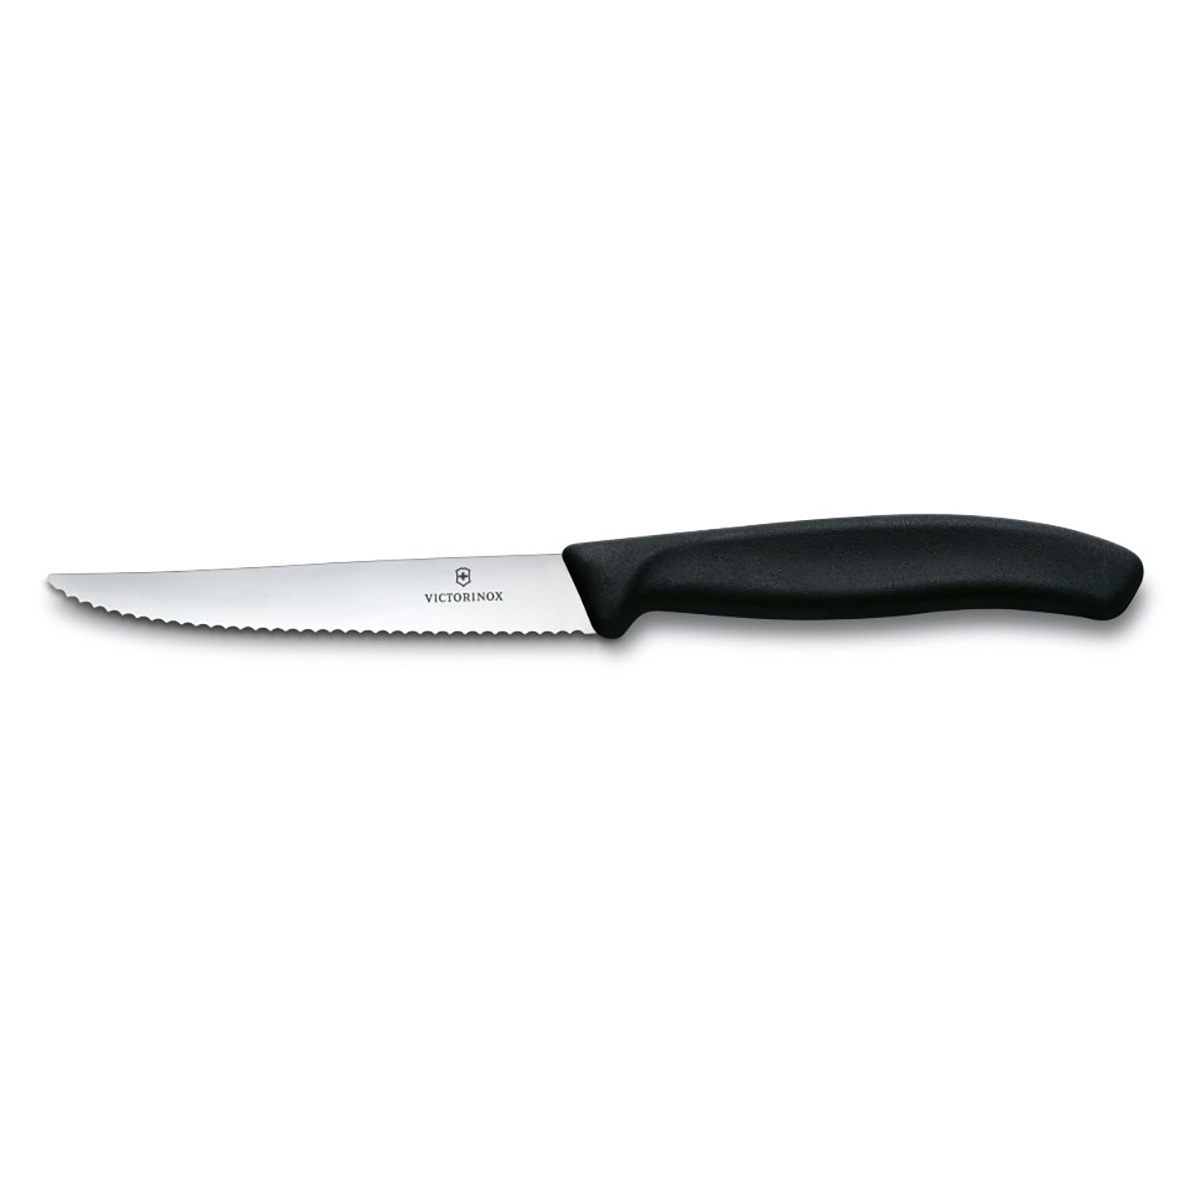 Кухонный нож для стейка Victorinox 6.7233, d_6.7233 по цене 950.0 руб .